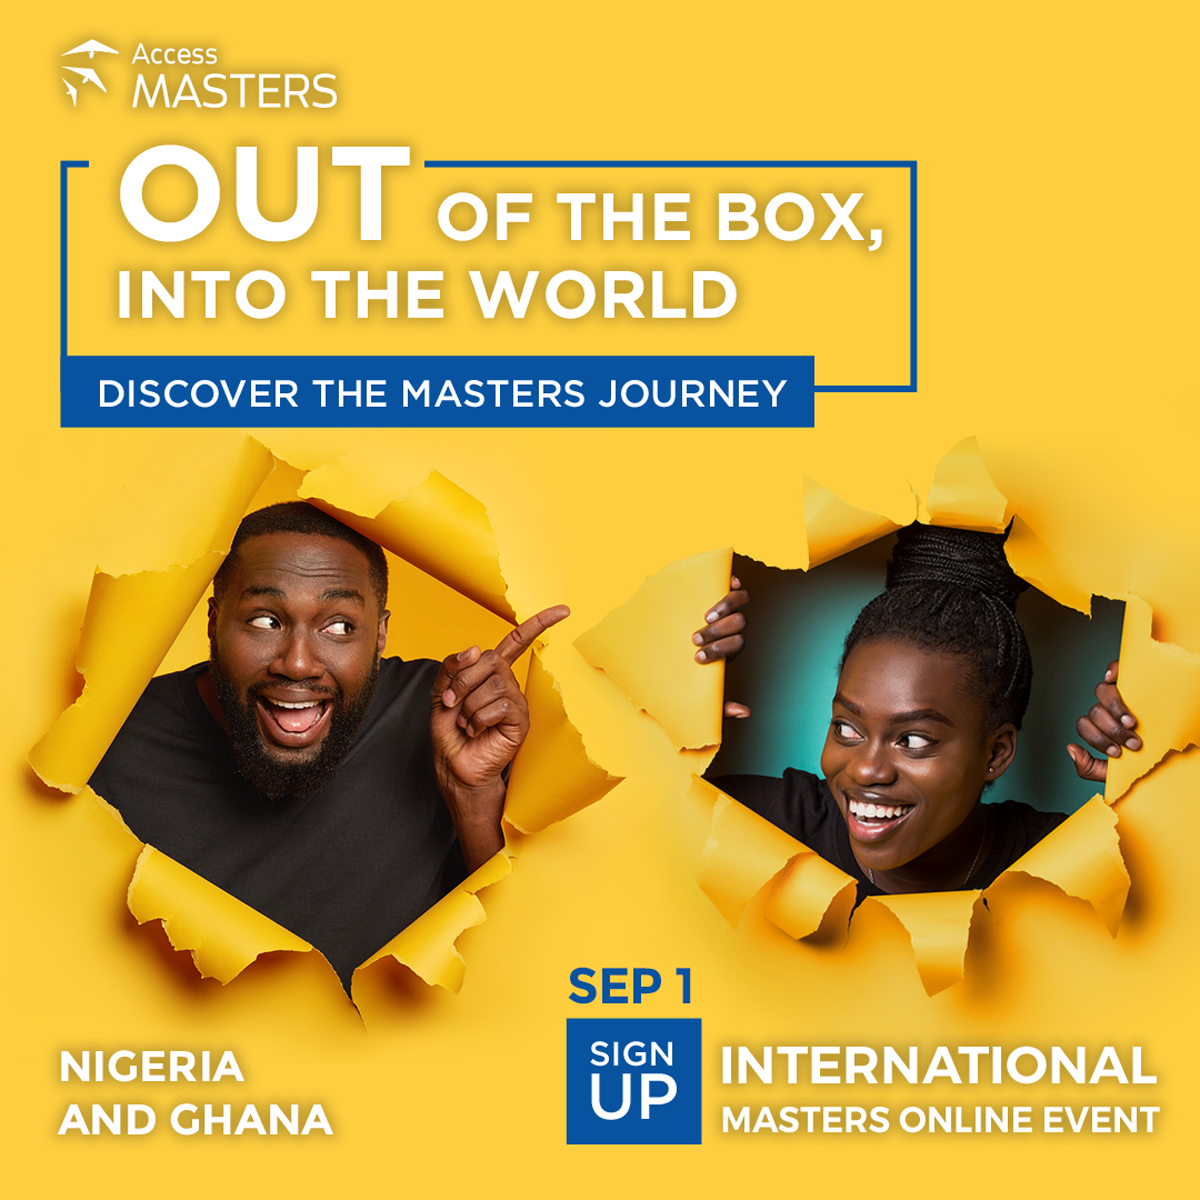 Masters Online Event Nigeria and Ghana, Online, Lagos, Nigeria